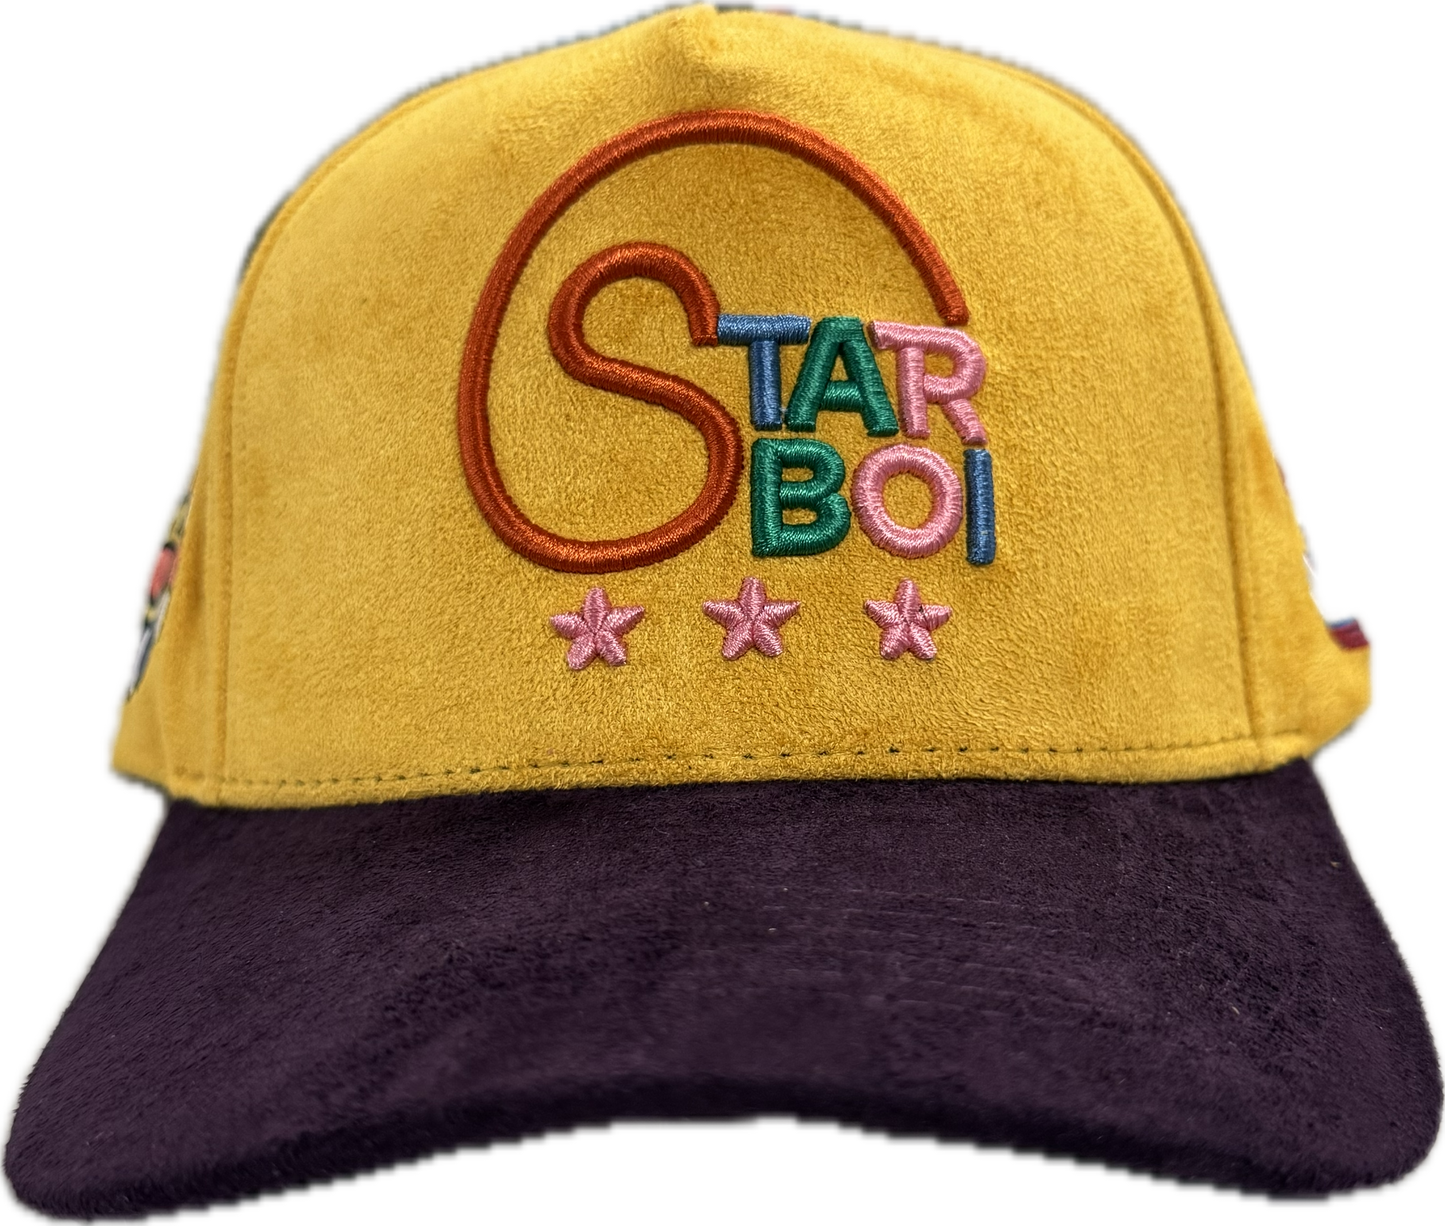 STARBOI Purple/Yellow Hat